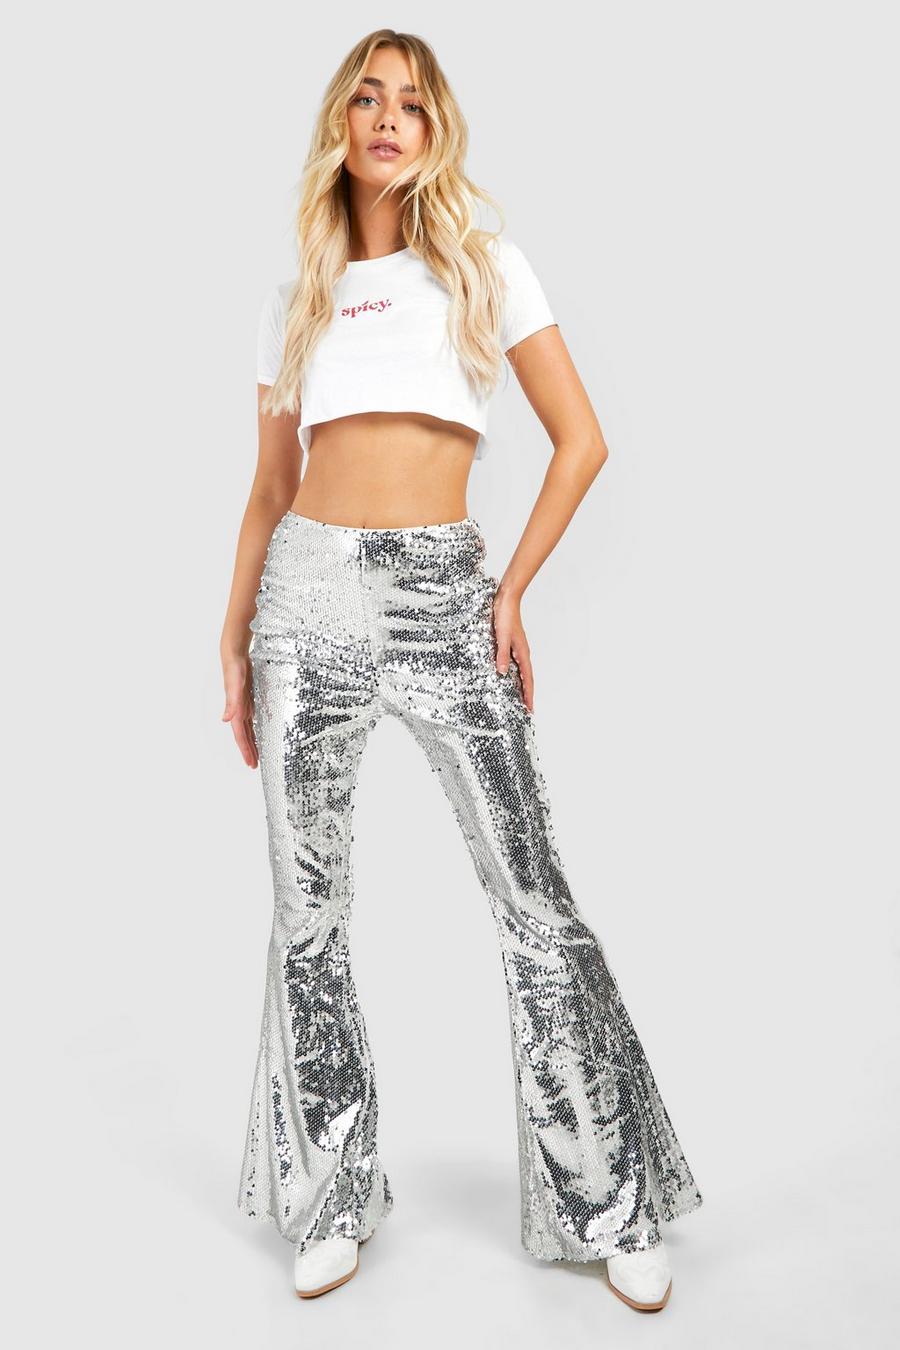 Silver מכנסיים מתרחבים high waisted עם פייטים